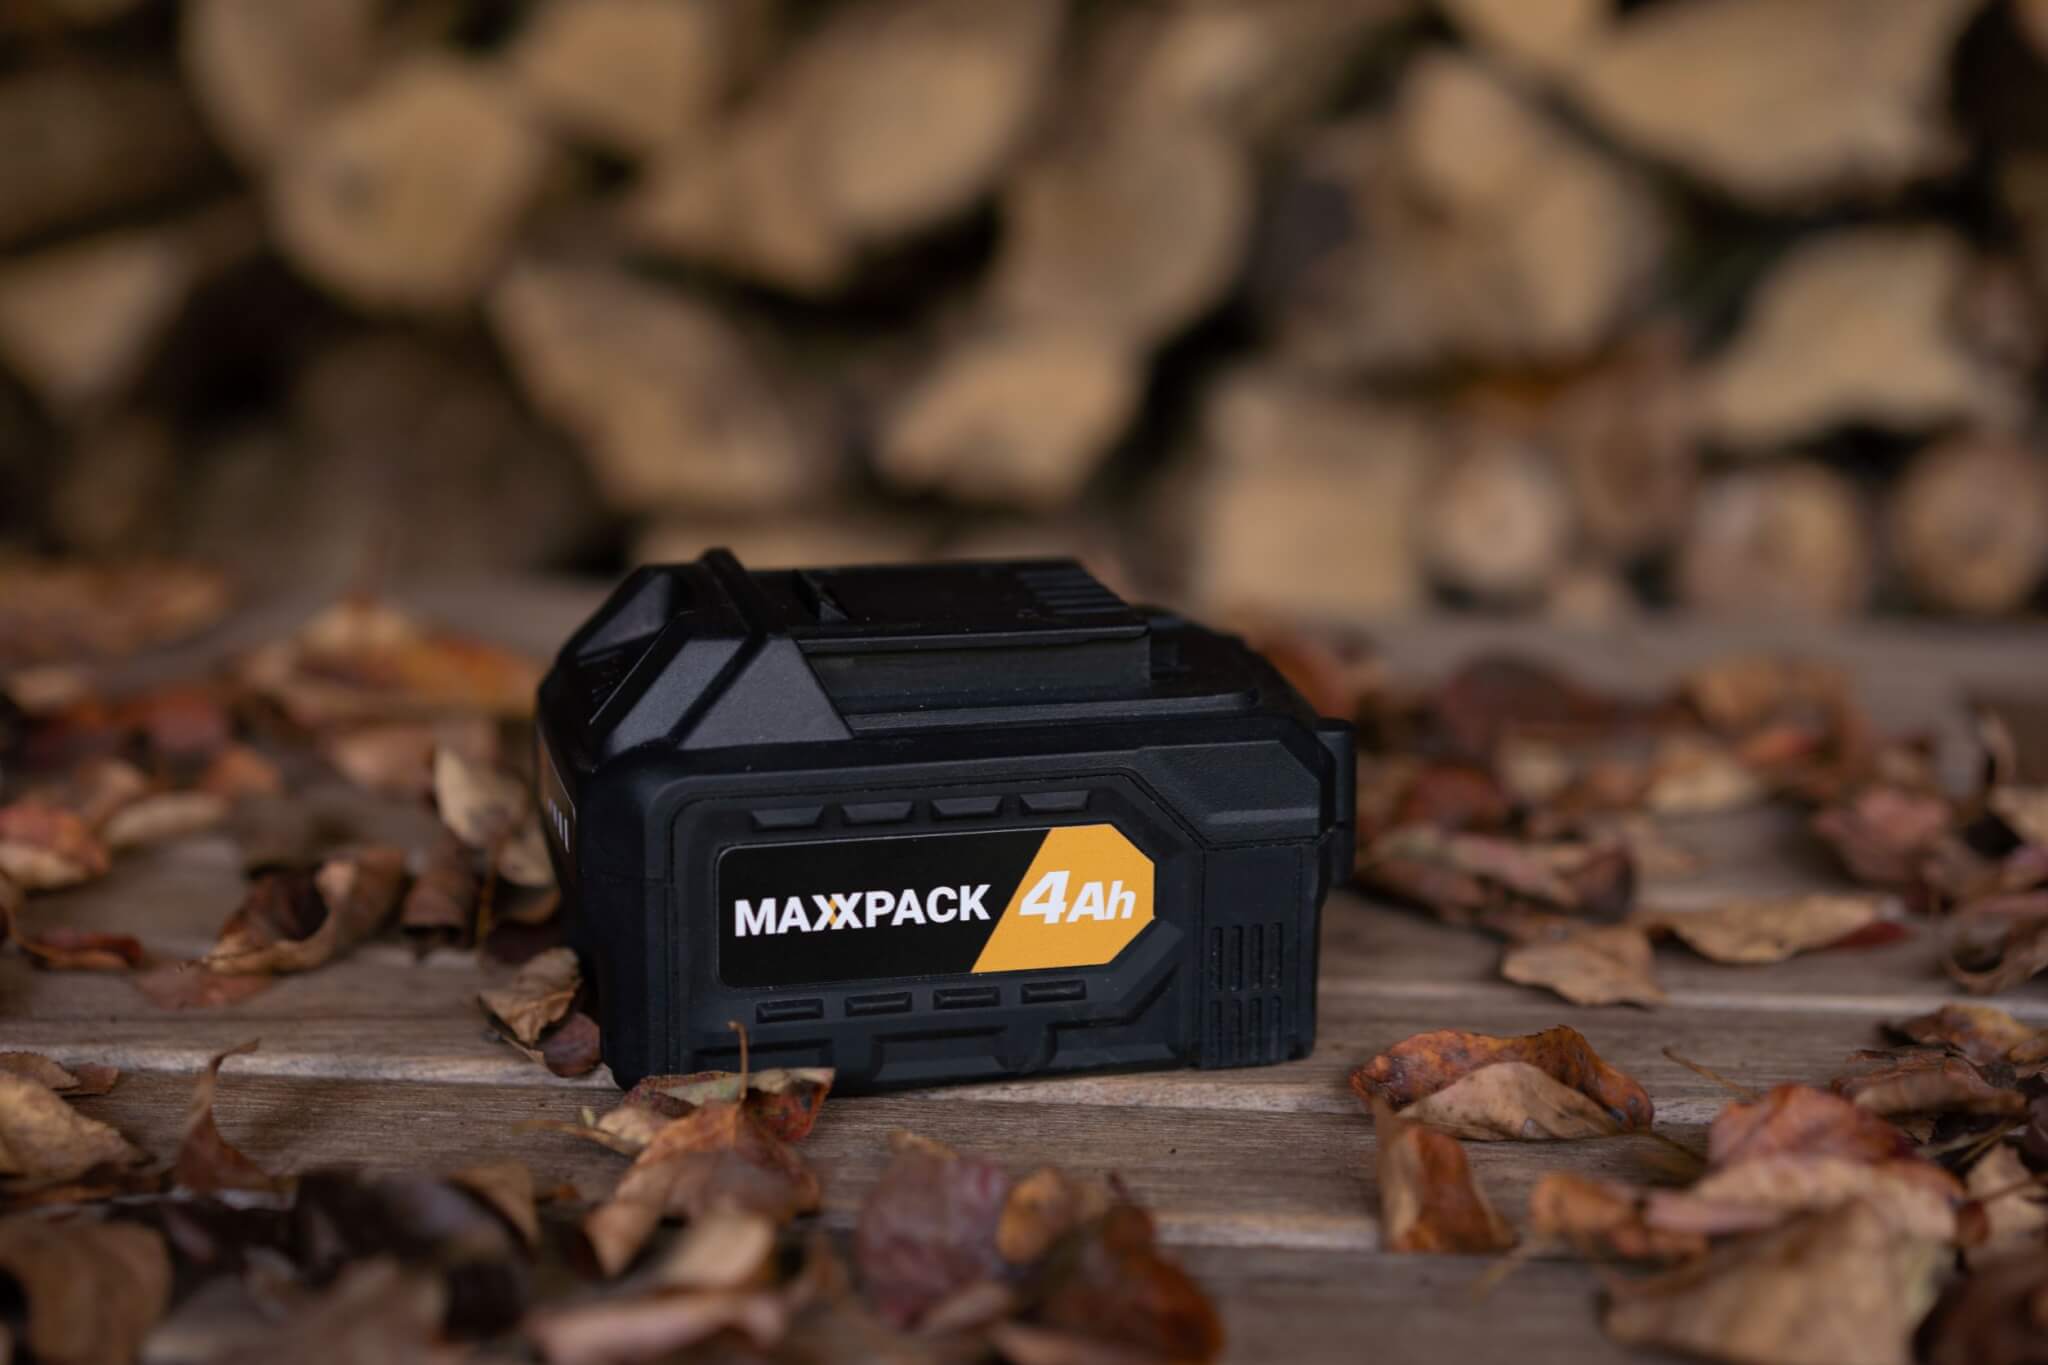 4.0Ah battery garden tools | Maxxpack collection | Batavia